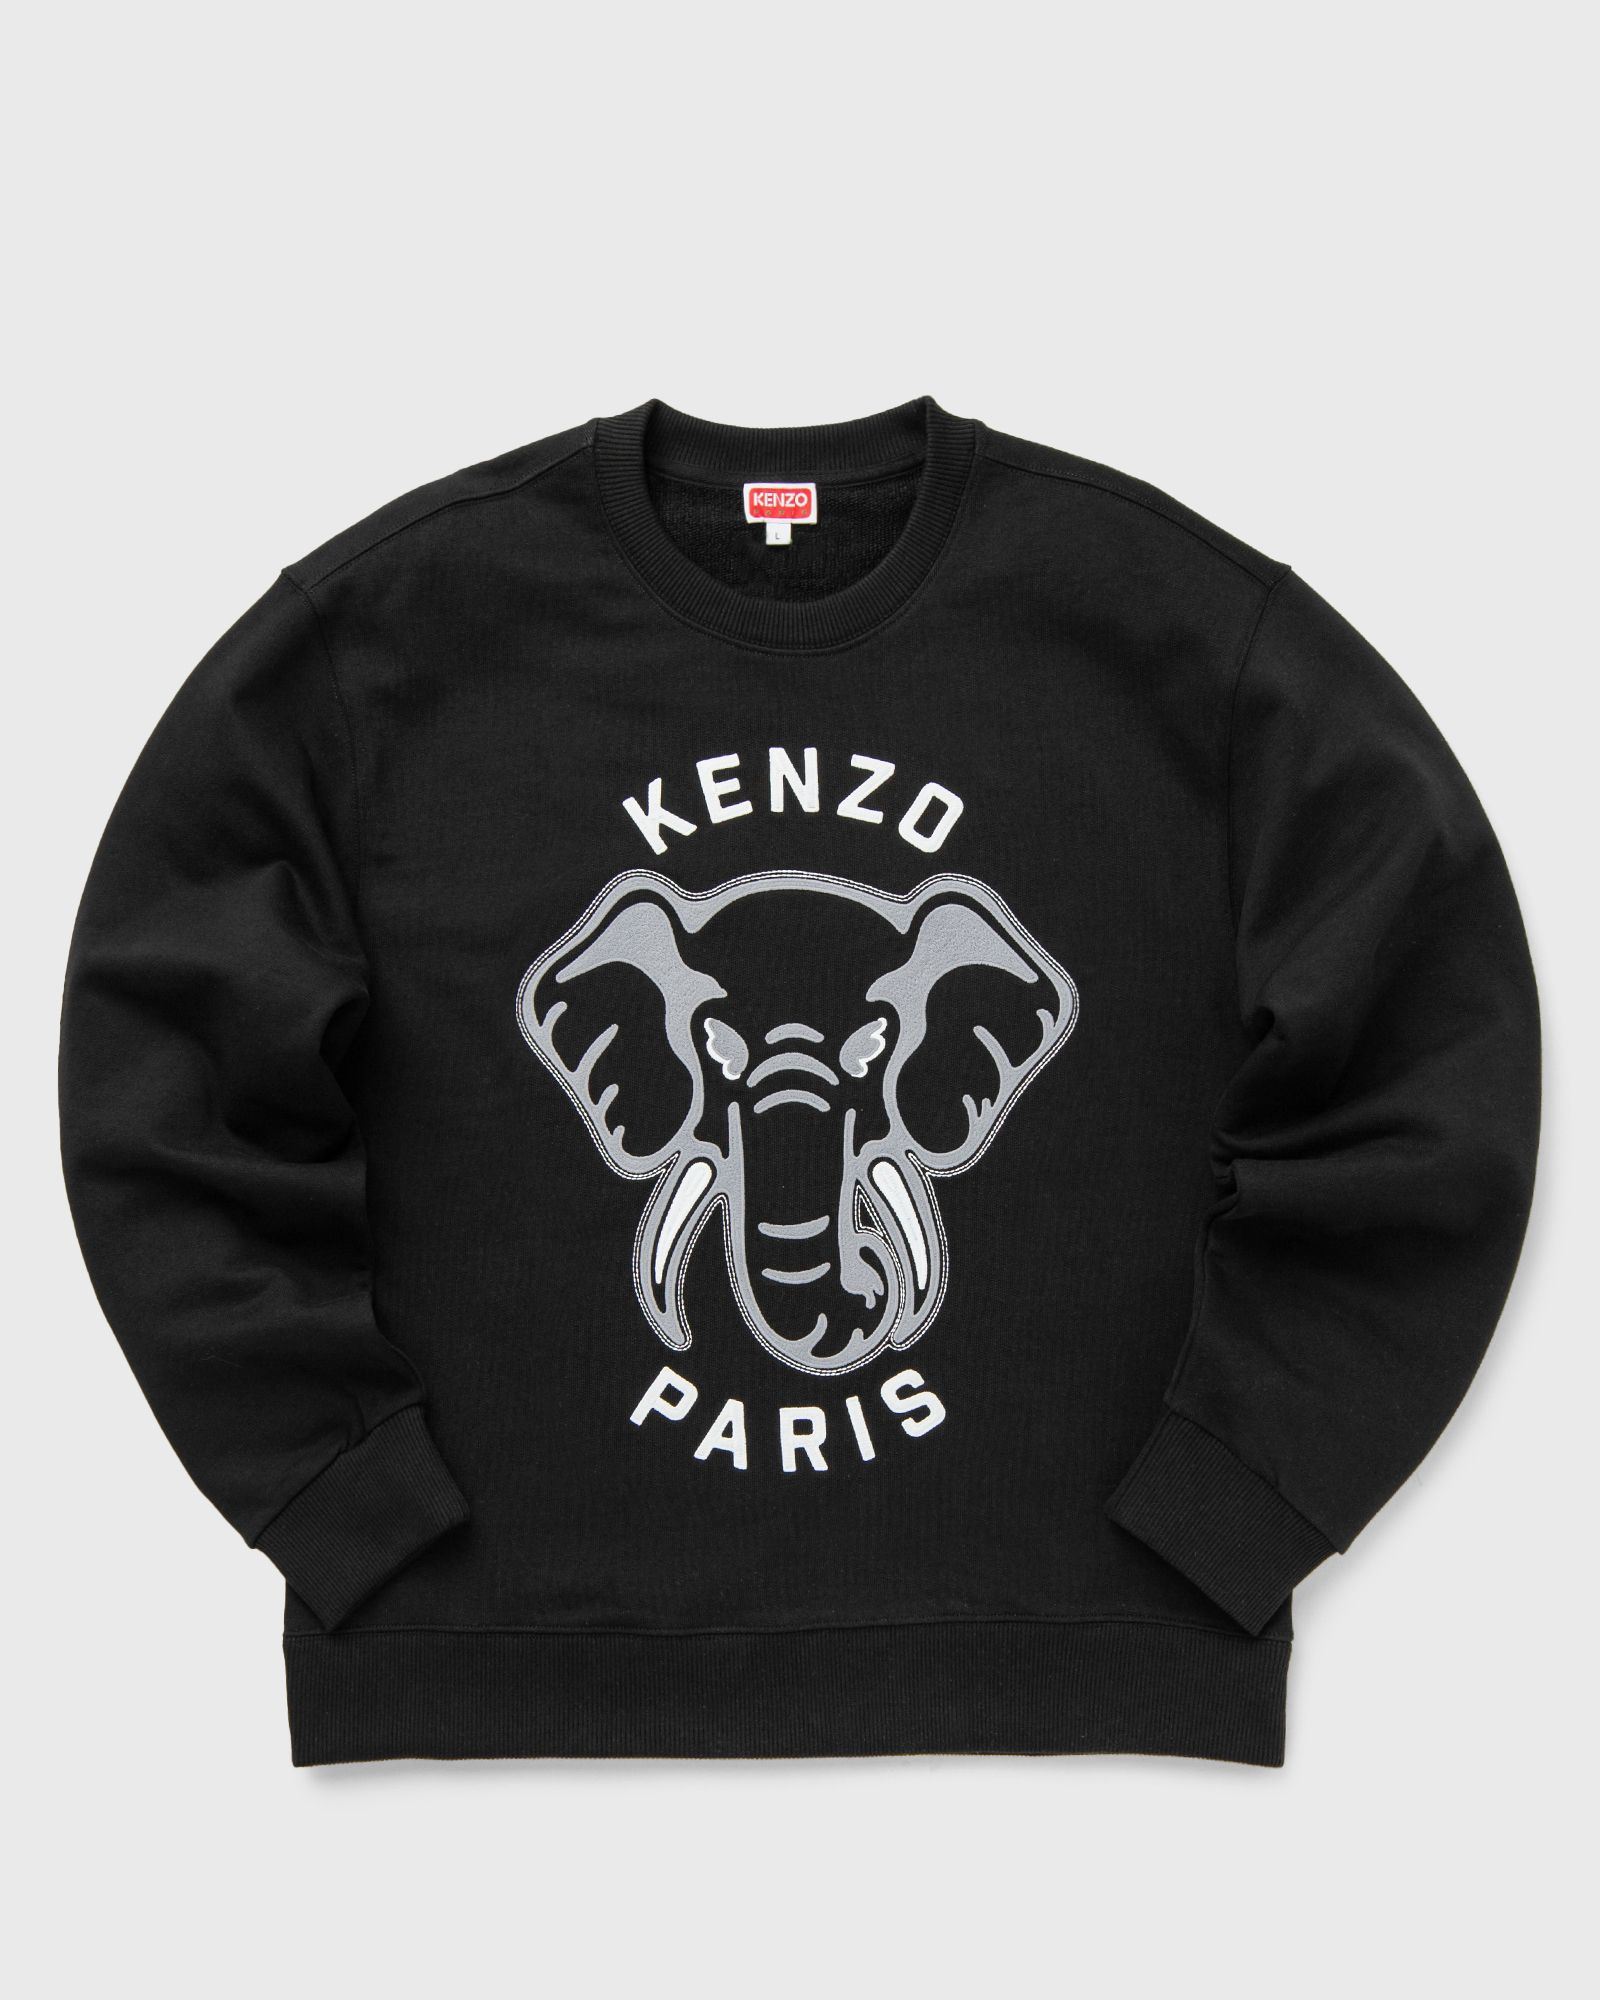 Kenzo - classic sweatshirt men sweatshirts black in größe:s